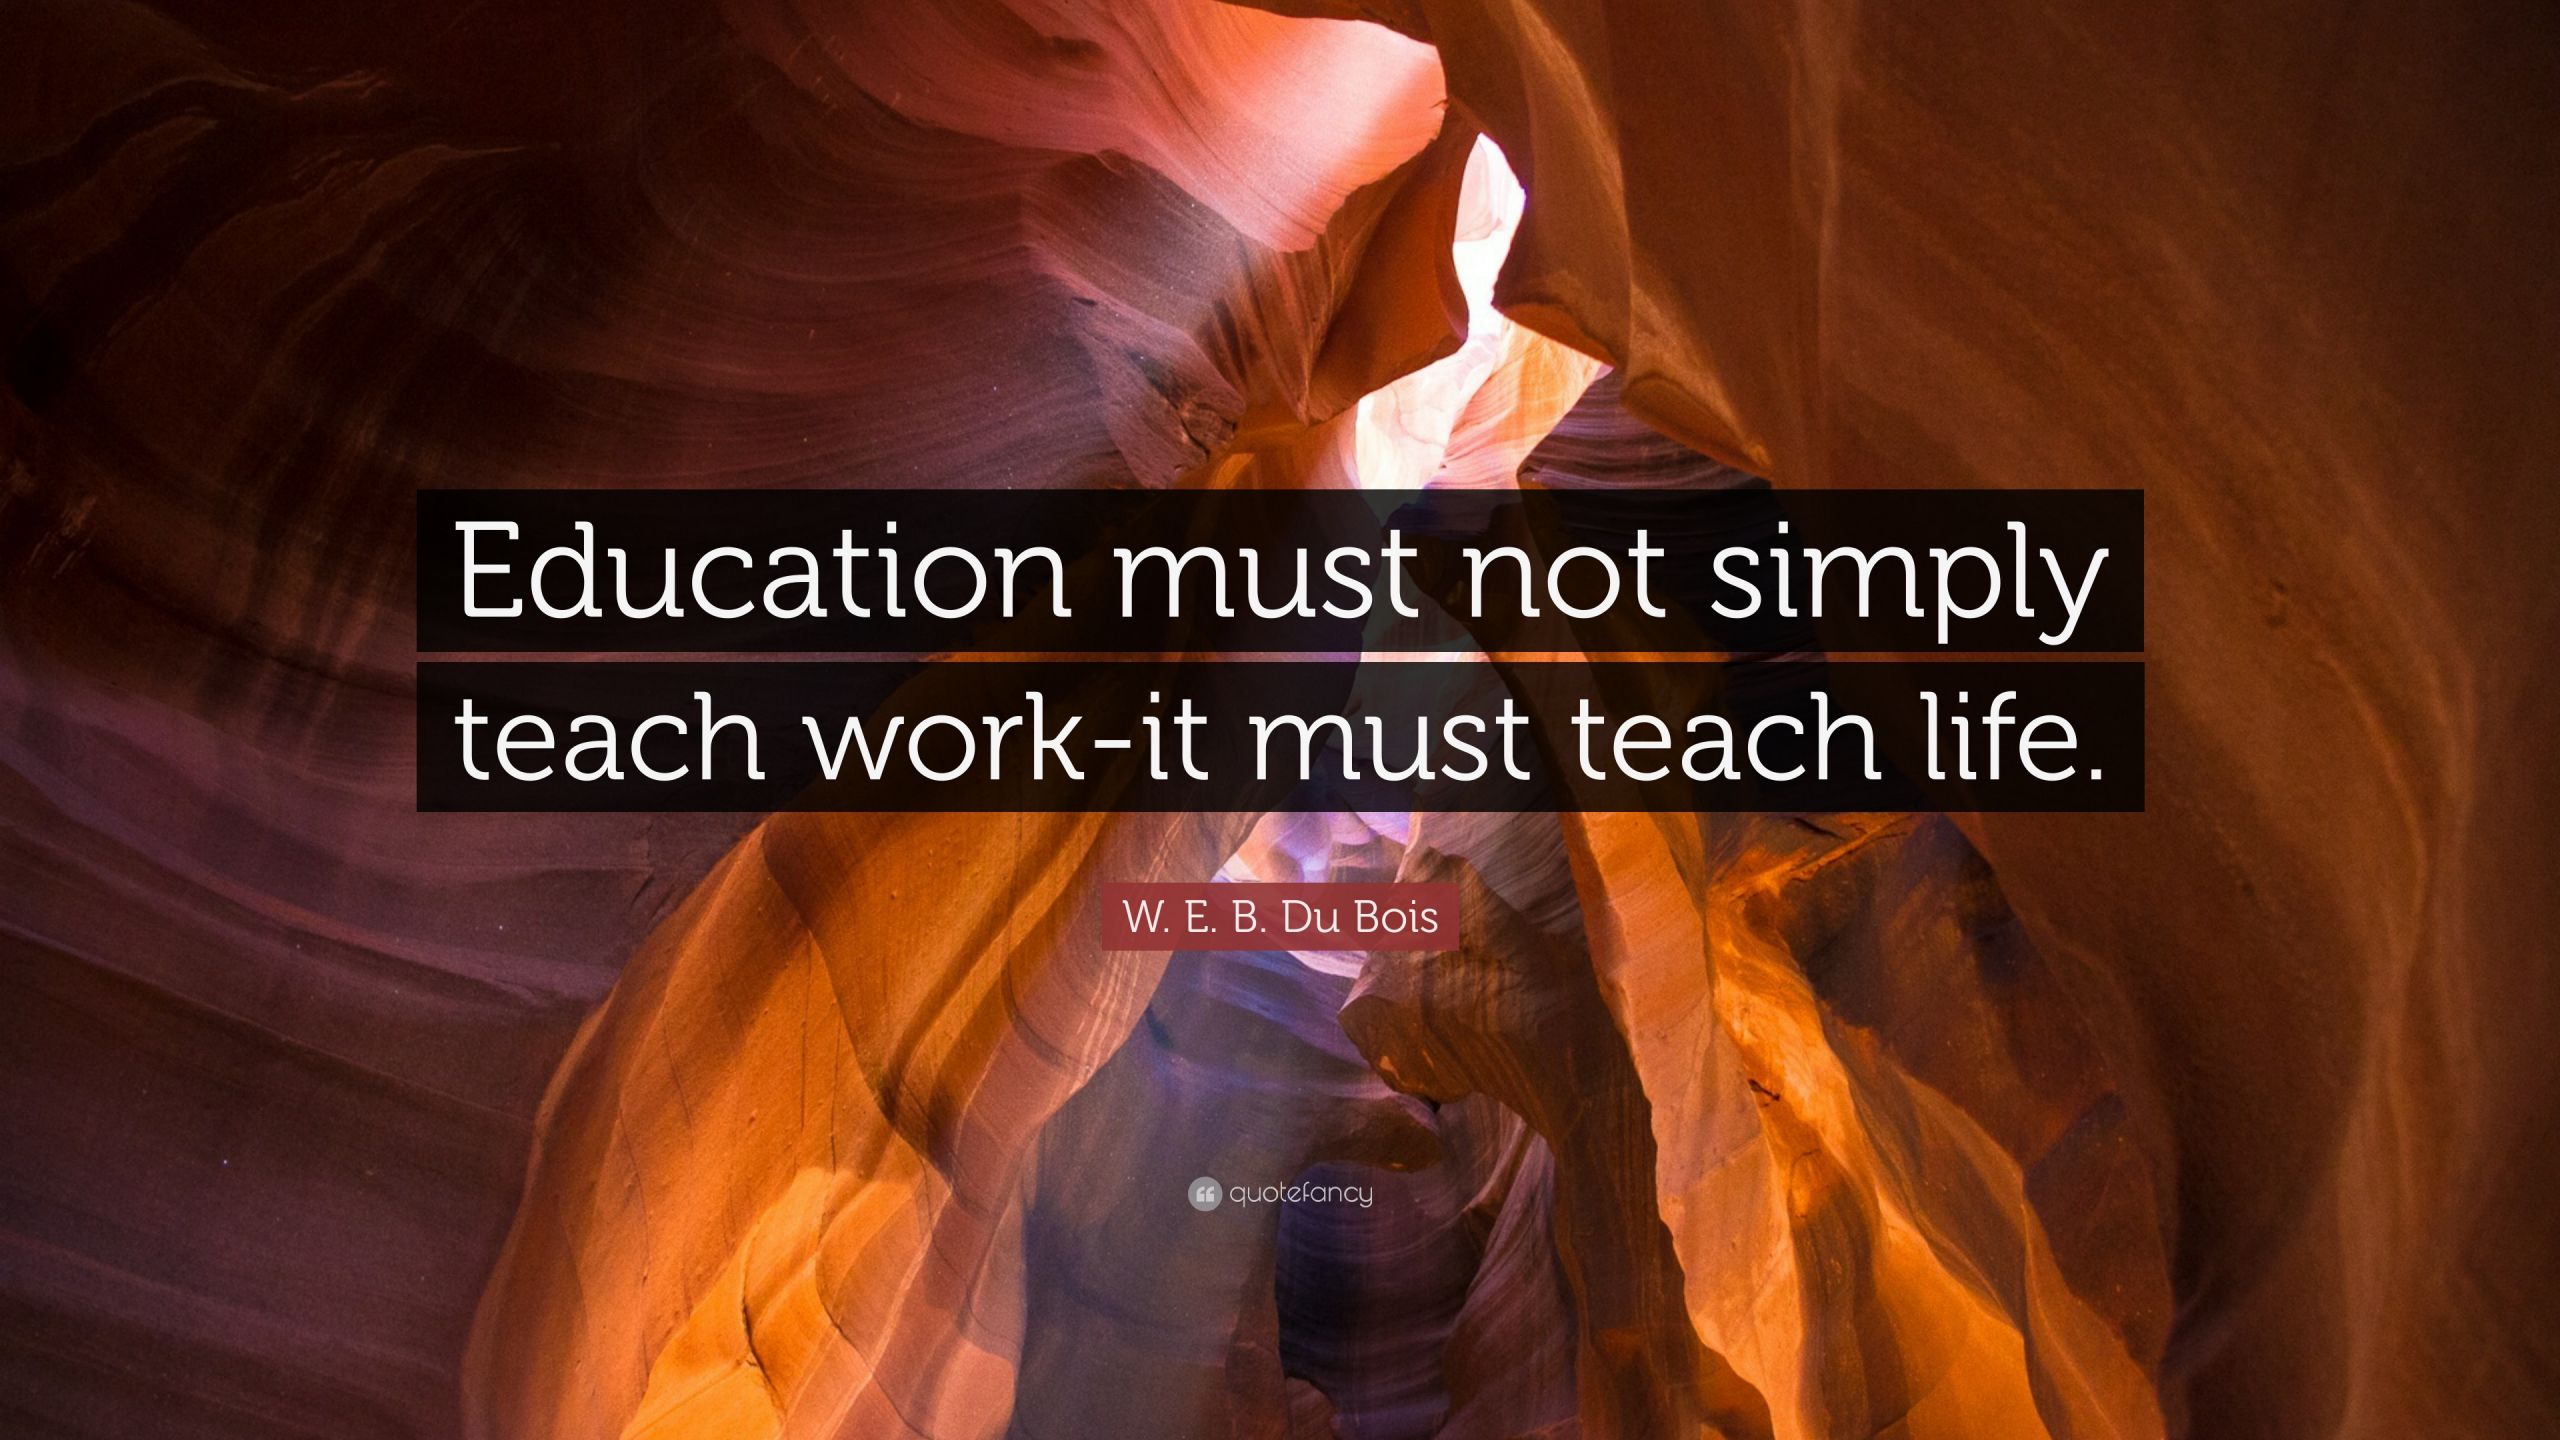 Web Dubois Education Quotes
 W E B Du Bois Quote “Education must not simply teach